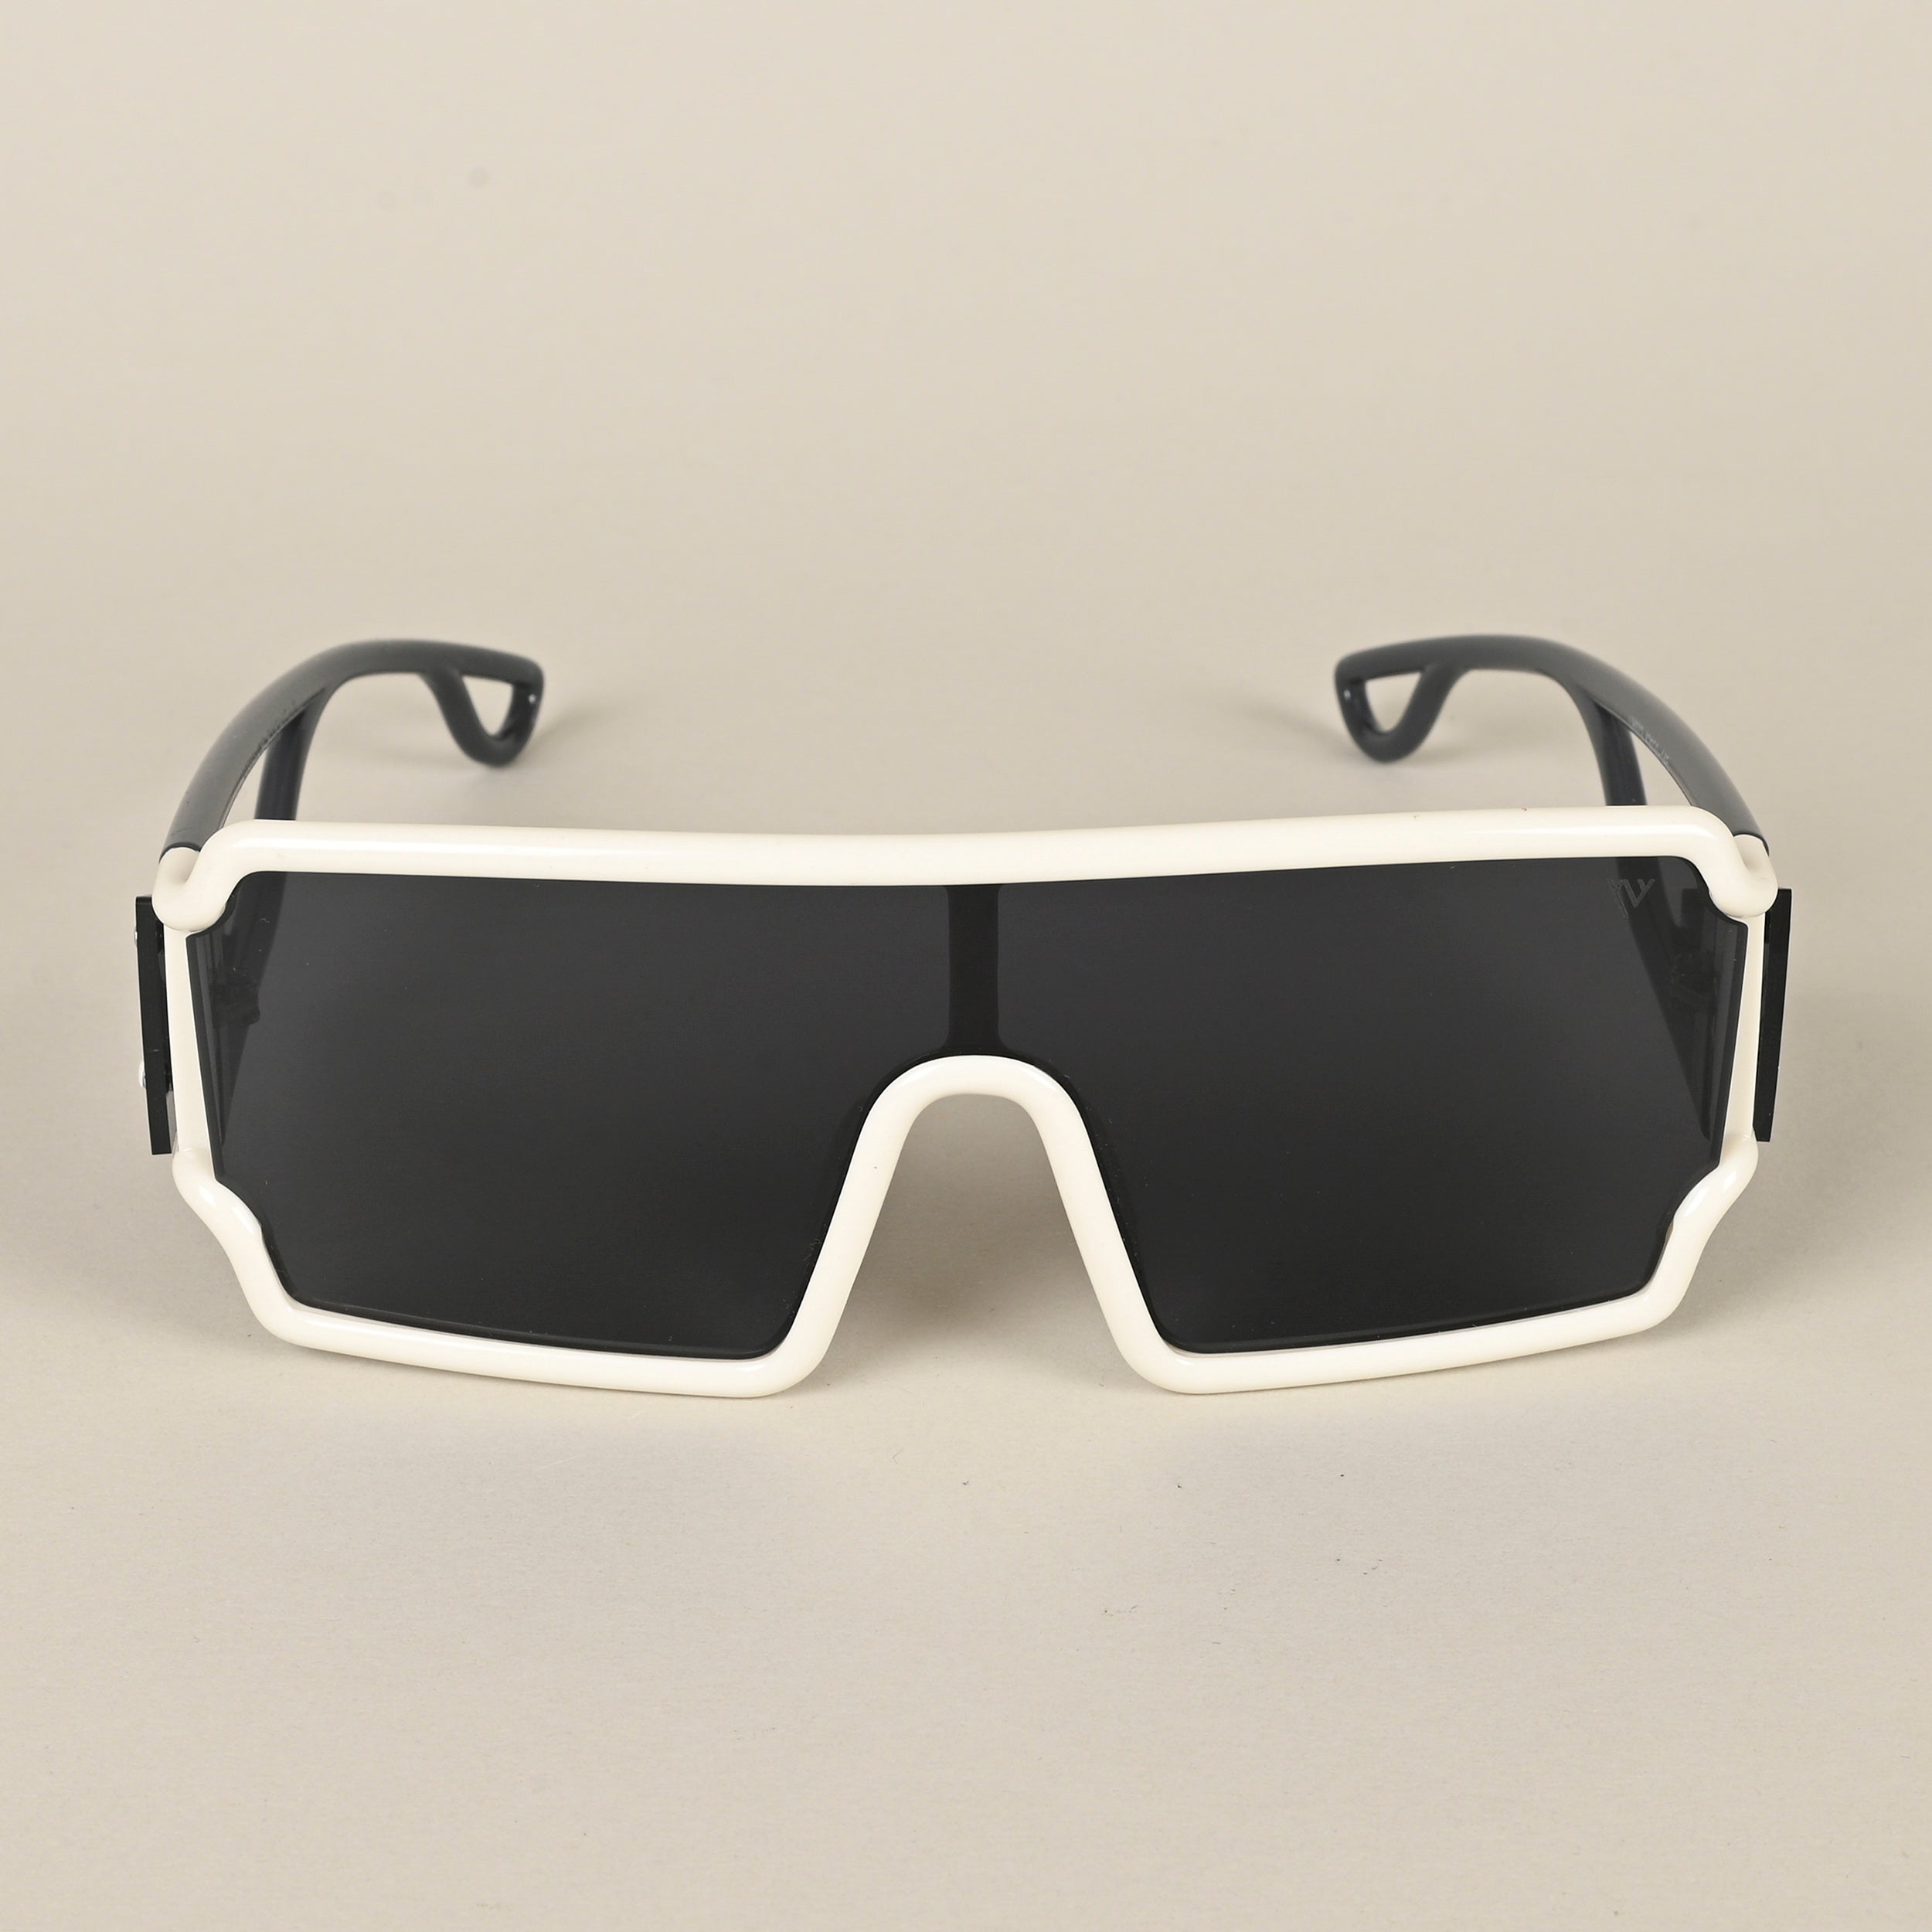 Voyage Snow White Wayfarer Sunglasses for Men & Women - MG4565